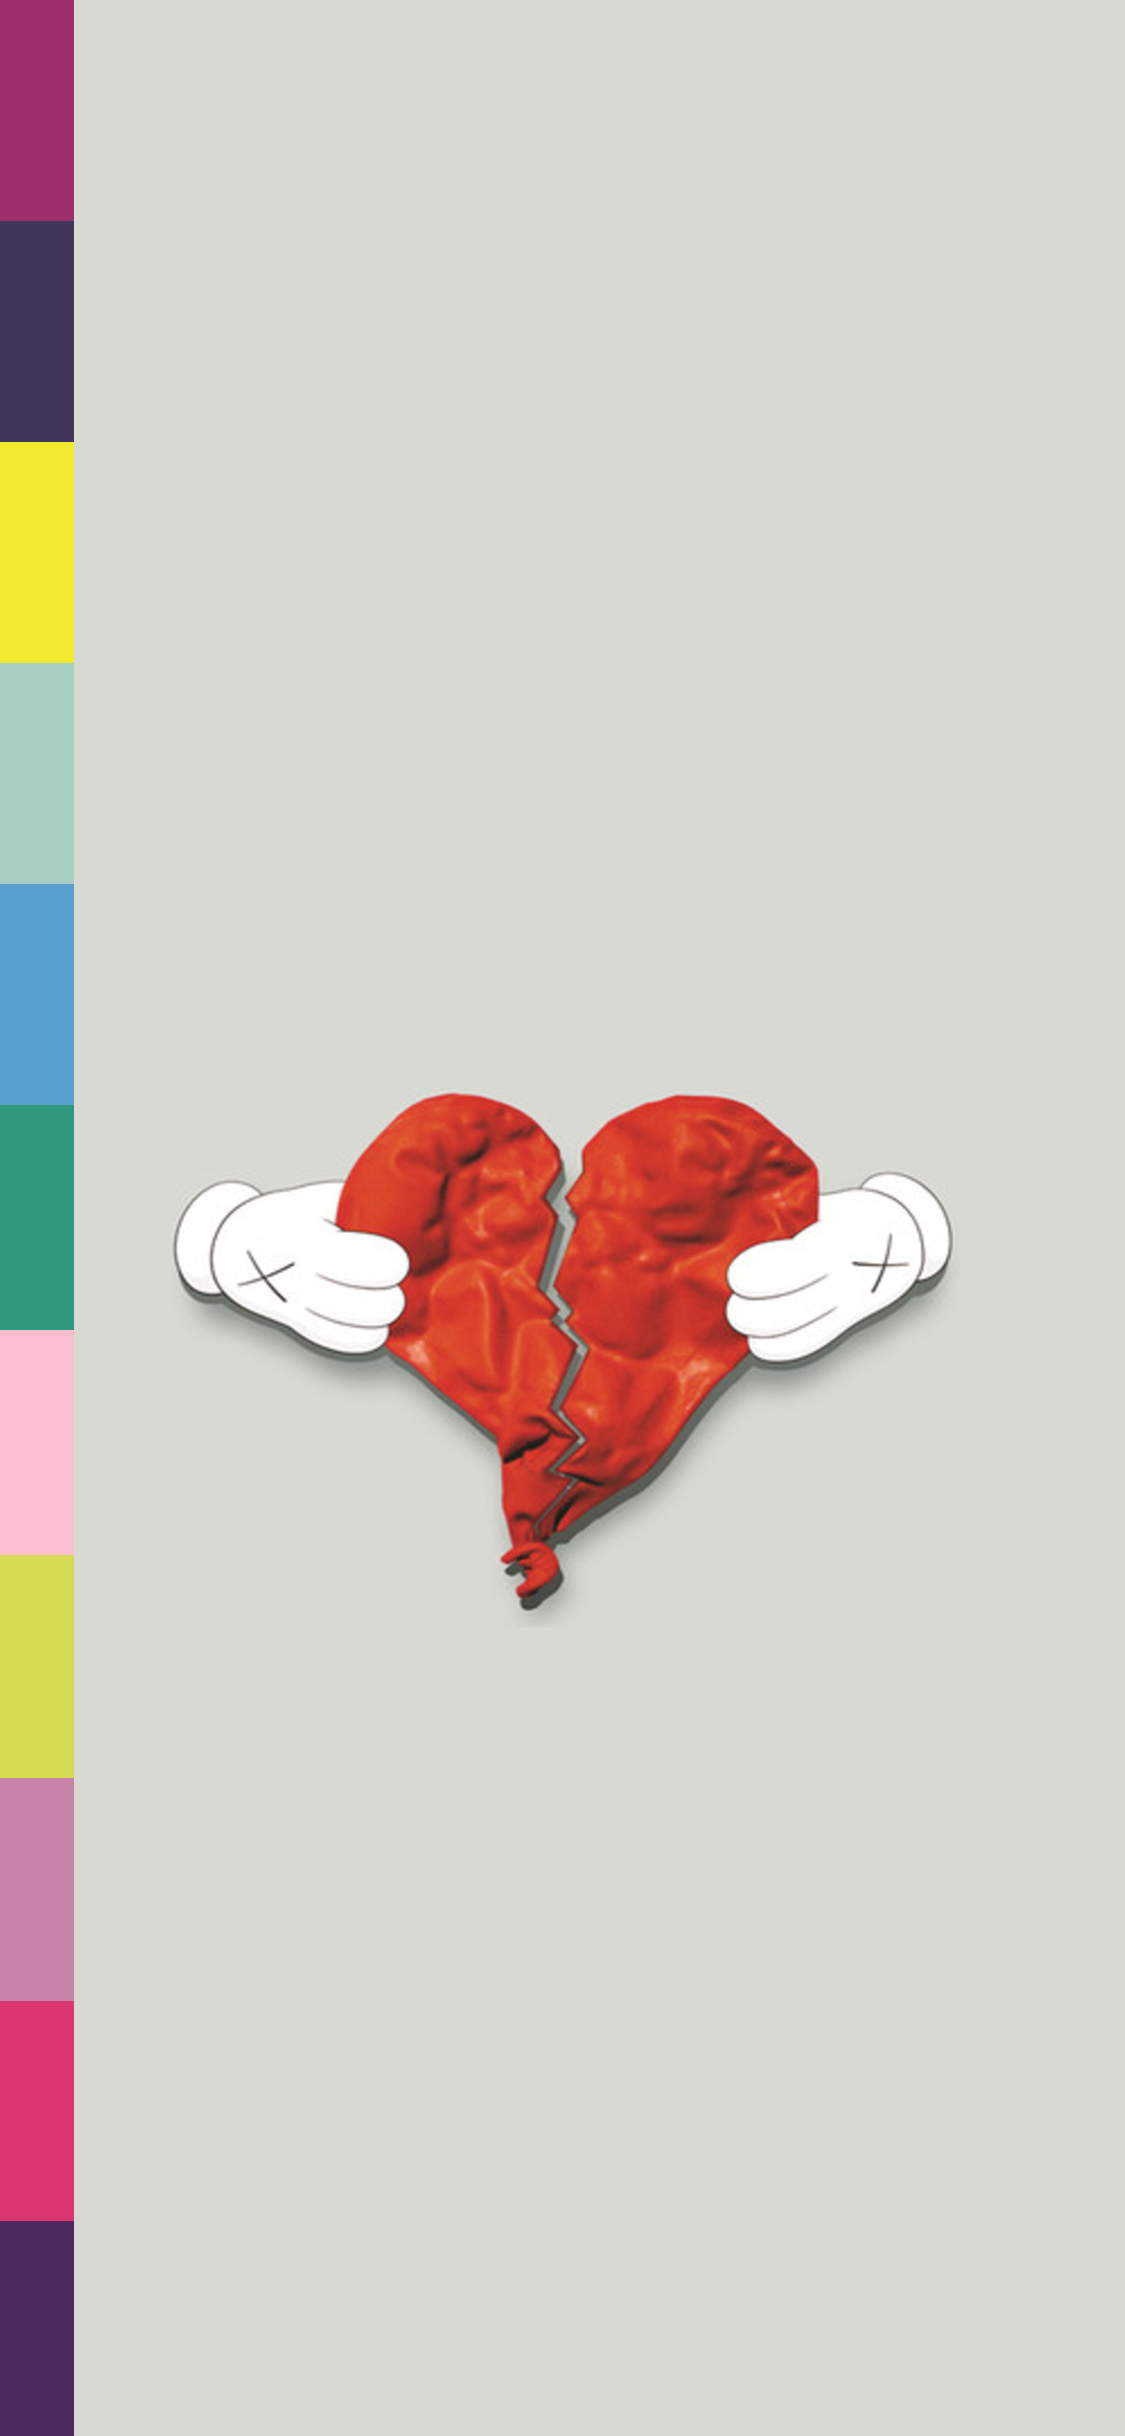 808's and Heartbreak [iPhone X]. Heartbreak wallpaper, iPhone wallpaper kanye, Kanye west wallpaper